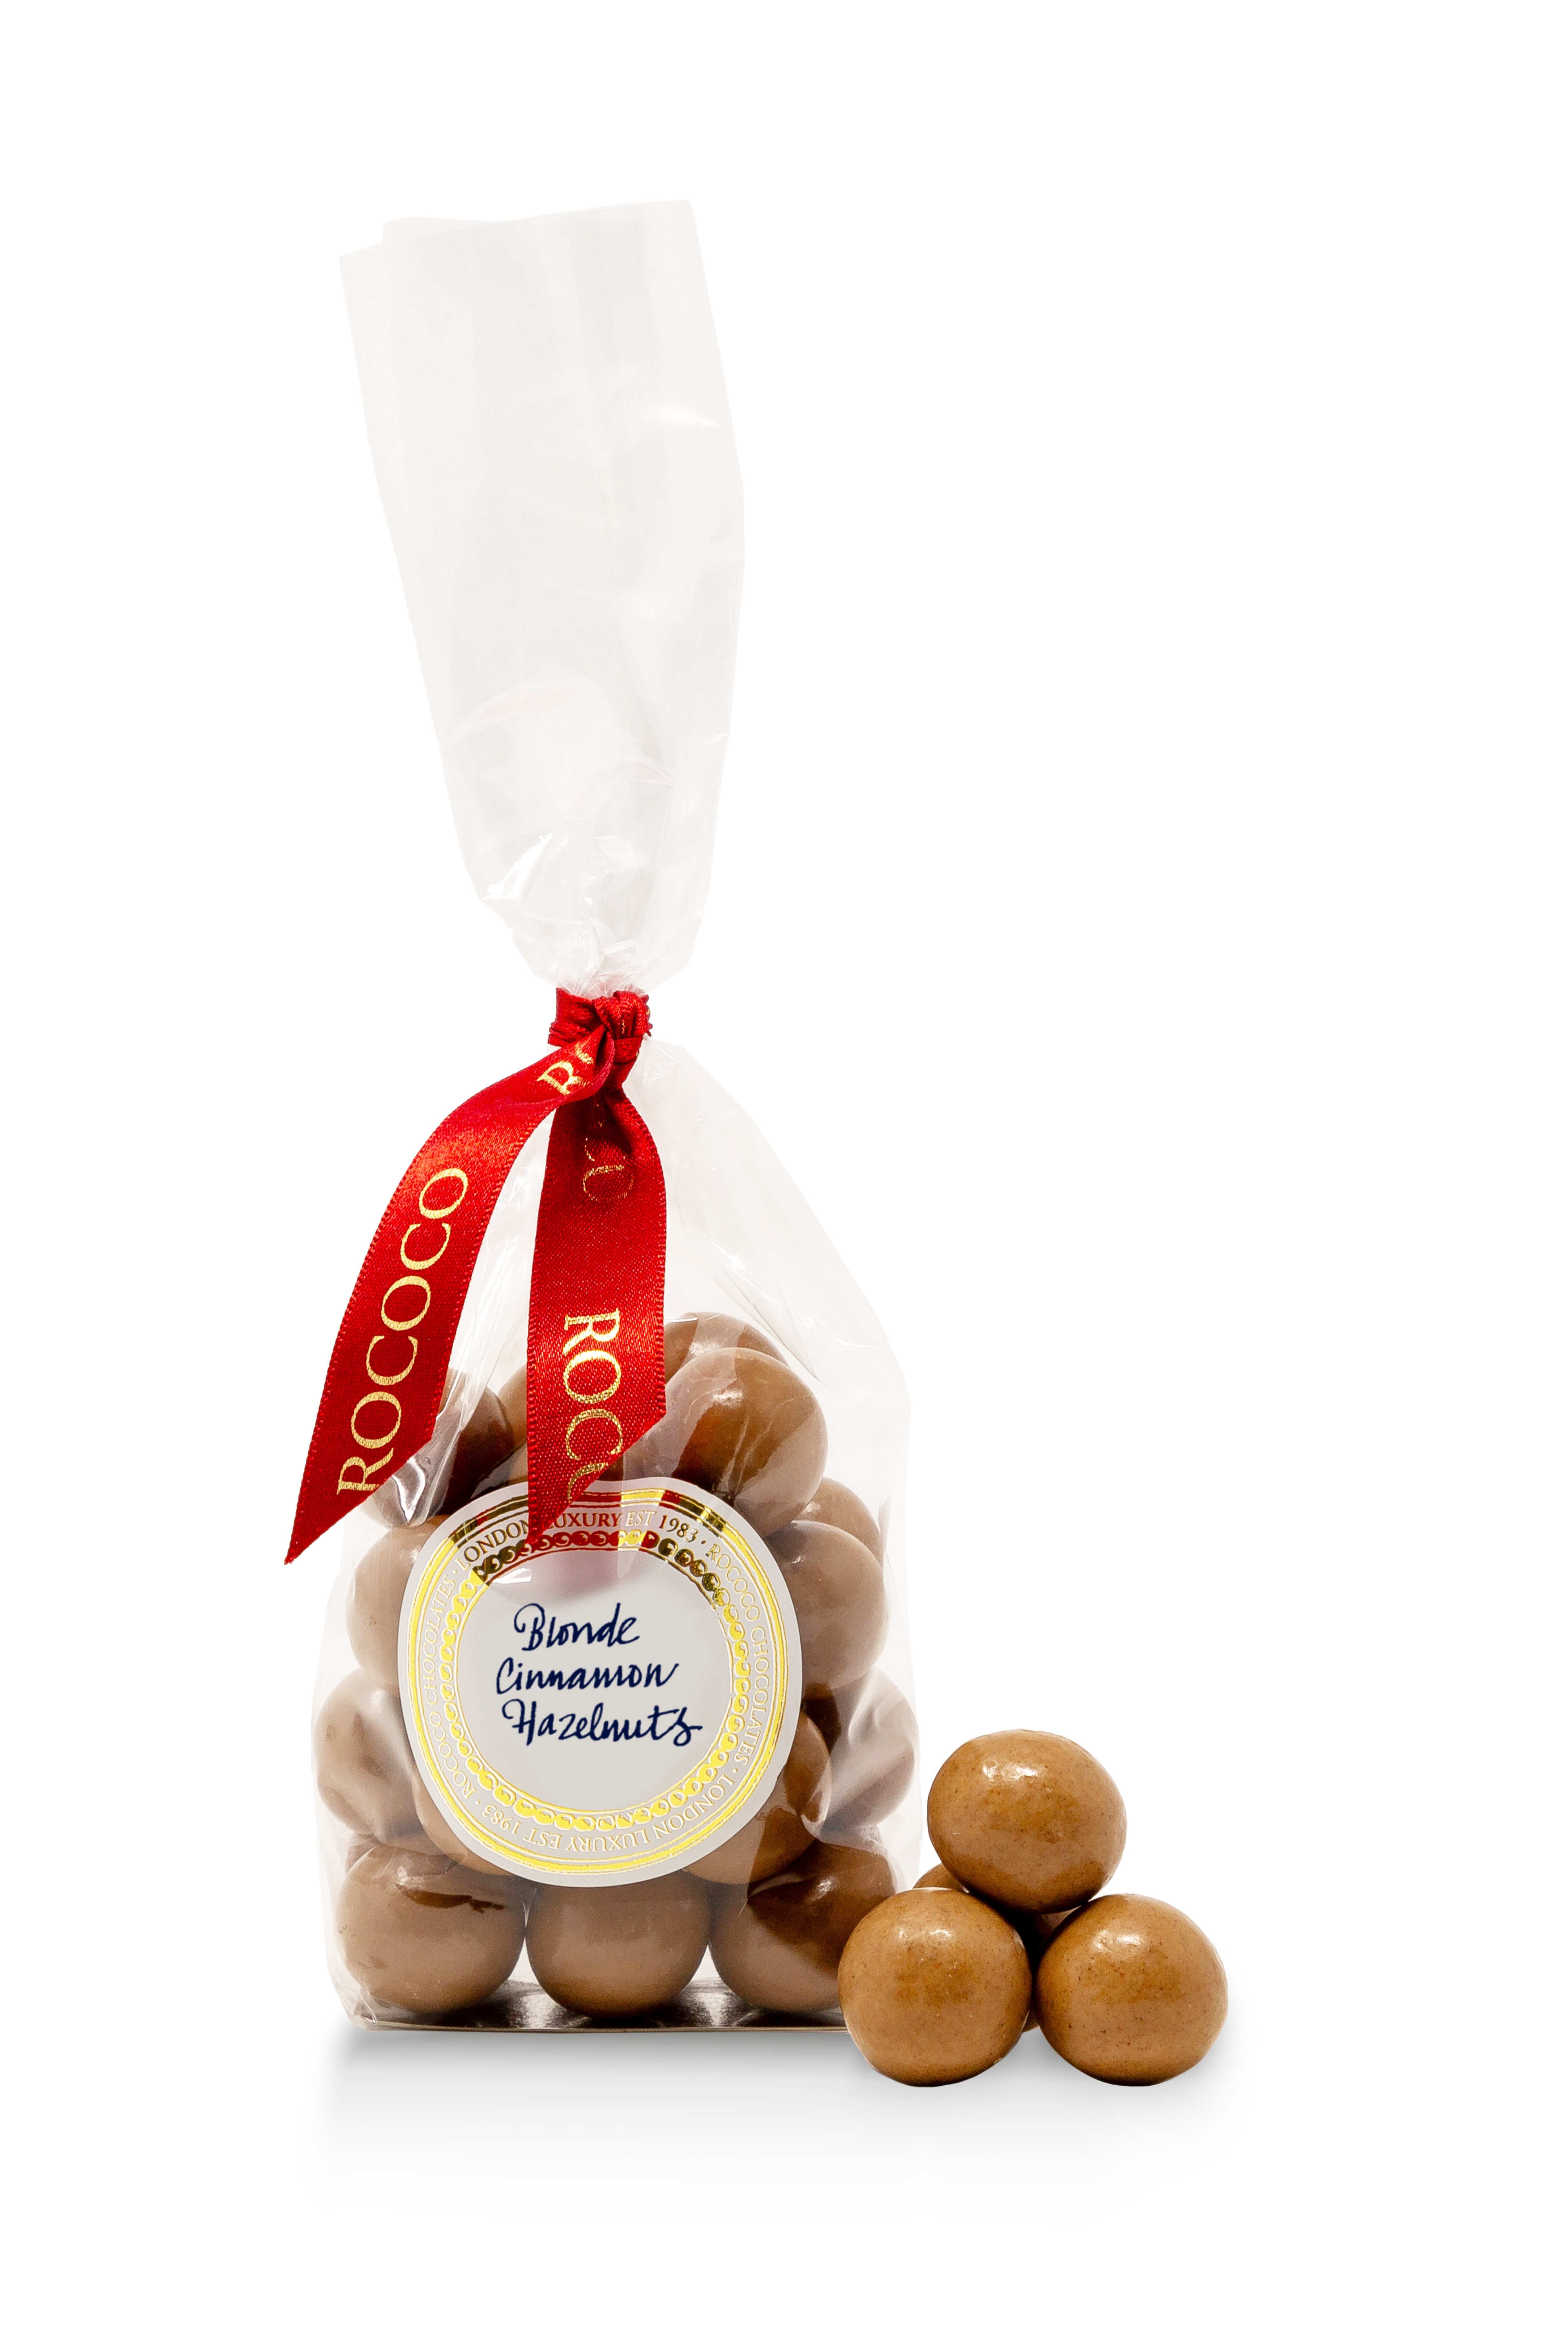 rococo-chocolates-blonde-cinnamon-hazelnuts-festive-nibbles